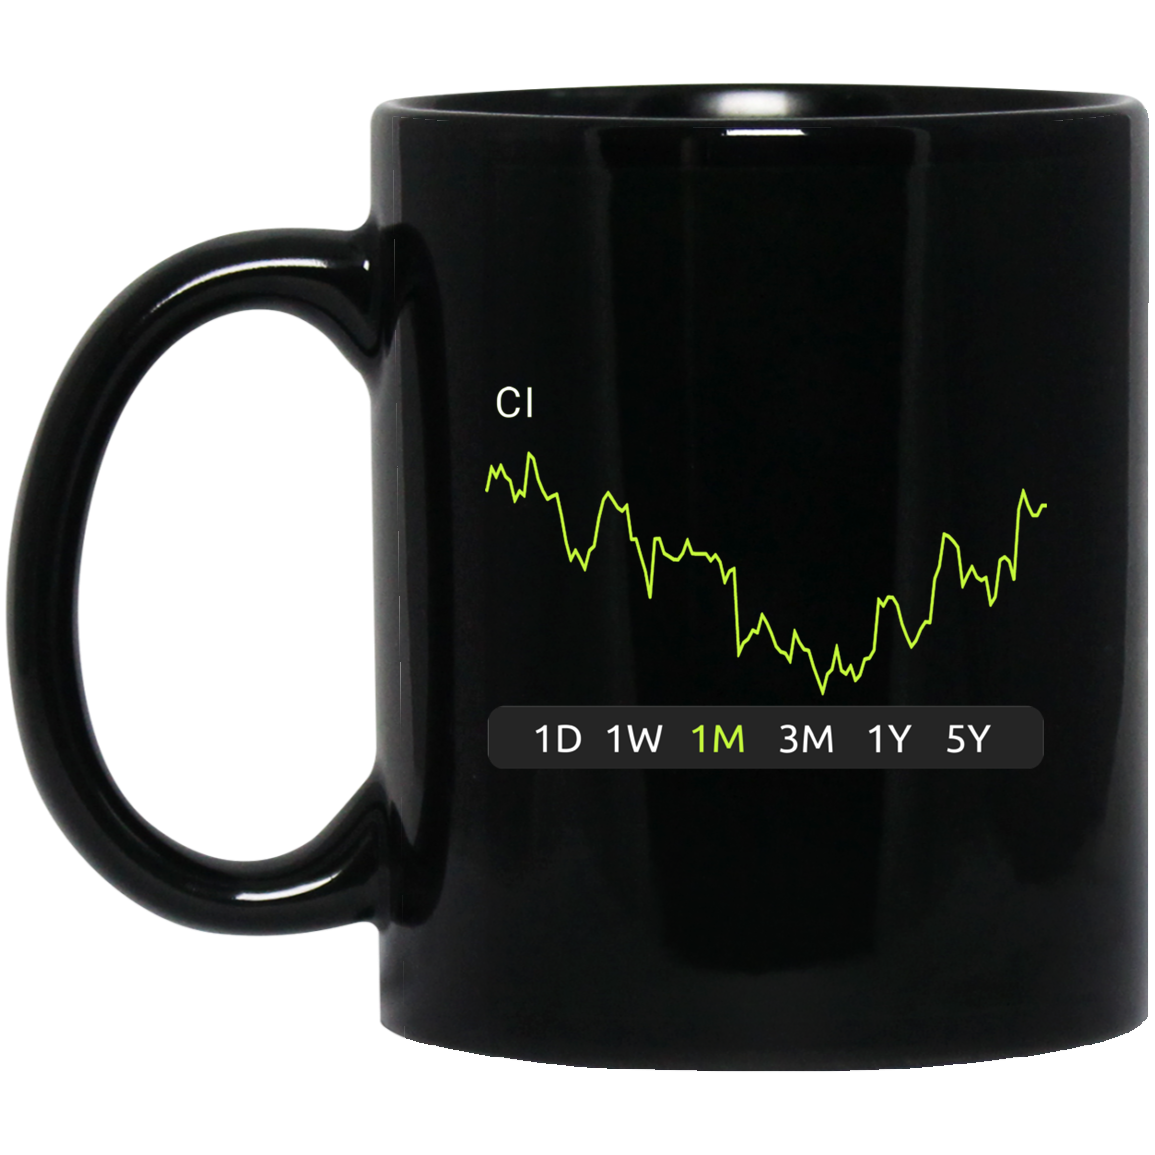 CI Stock 1m Mug